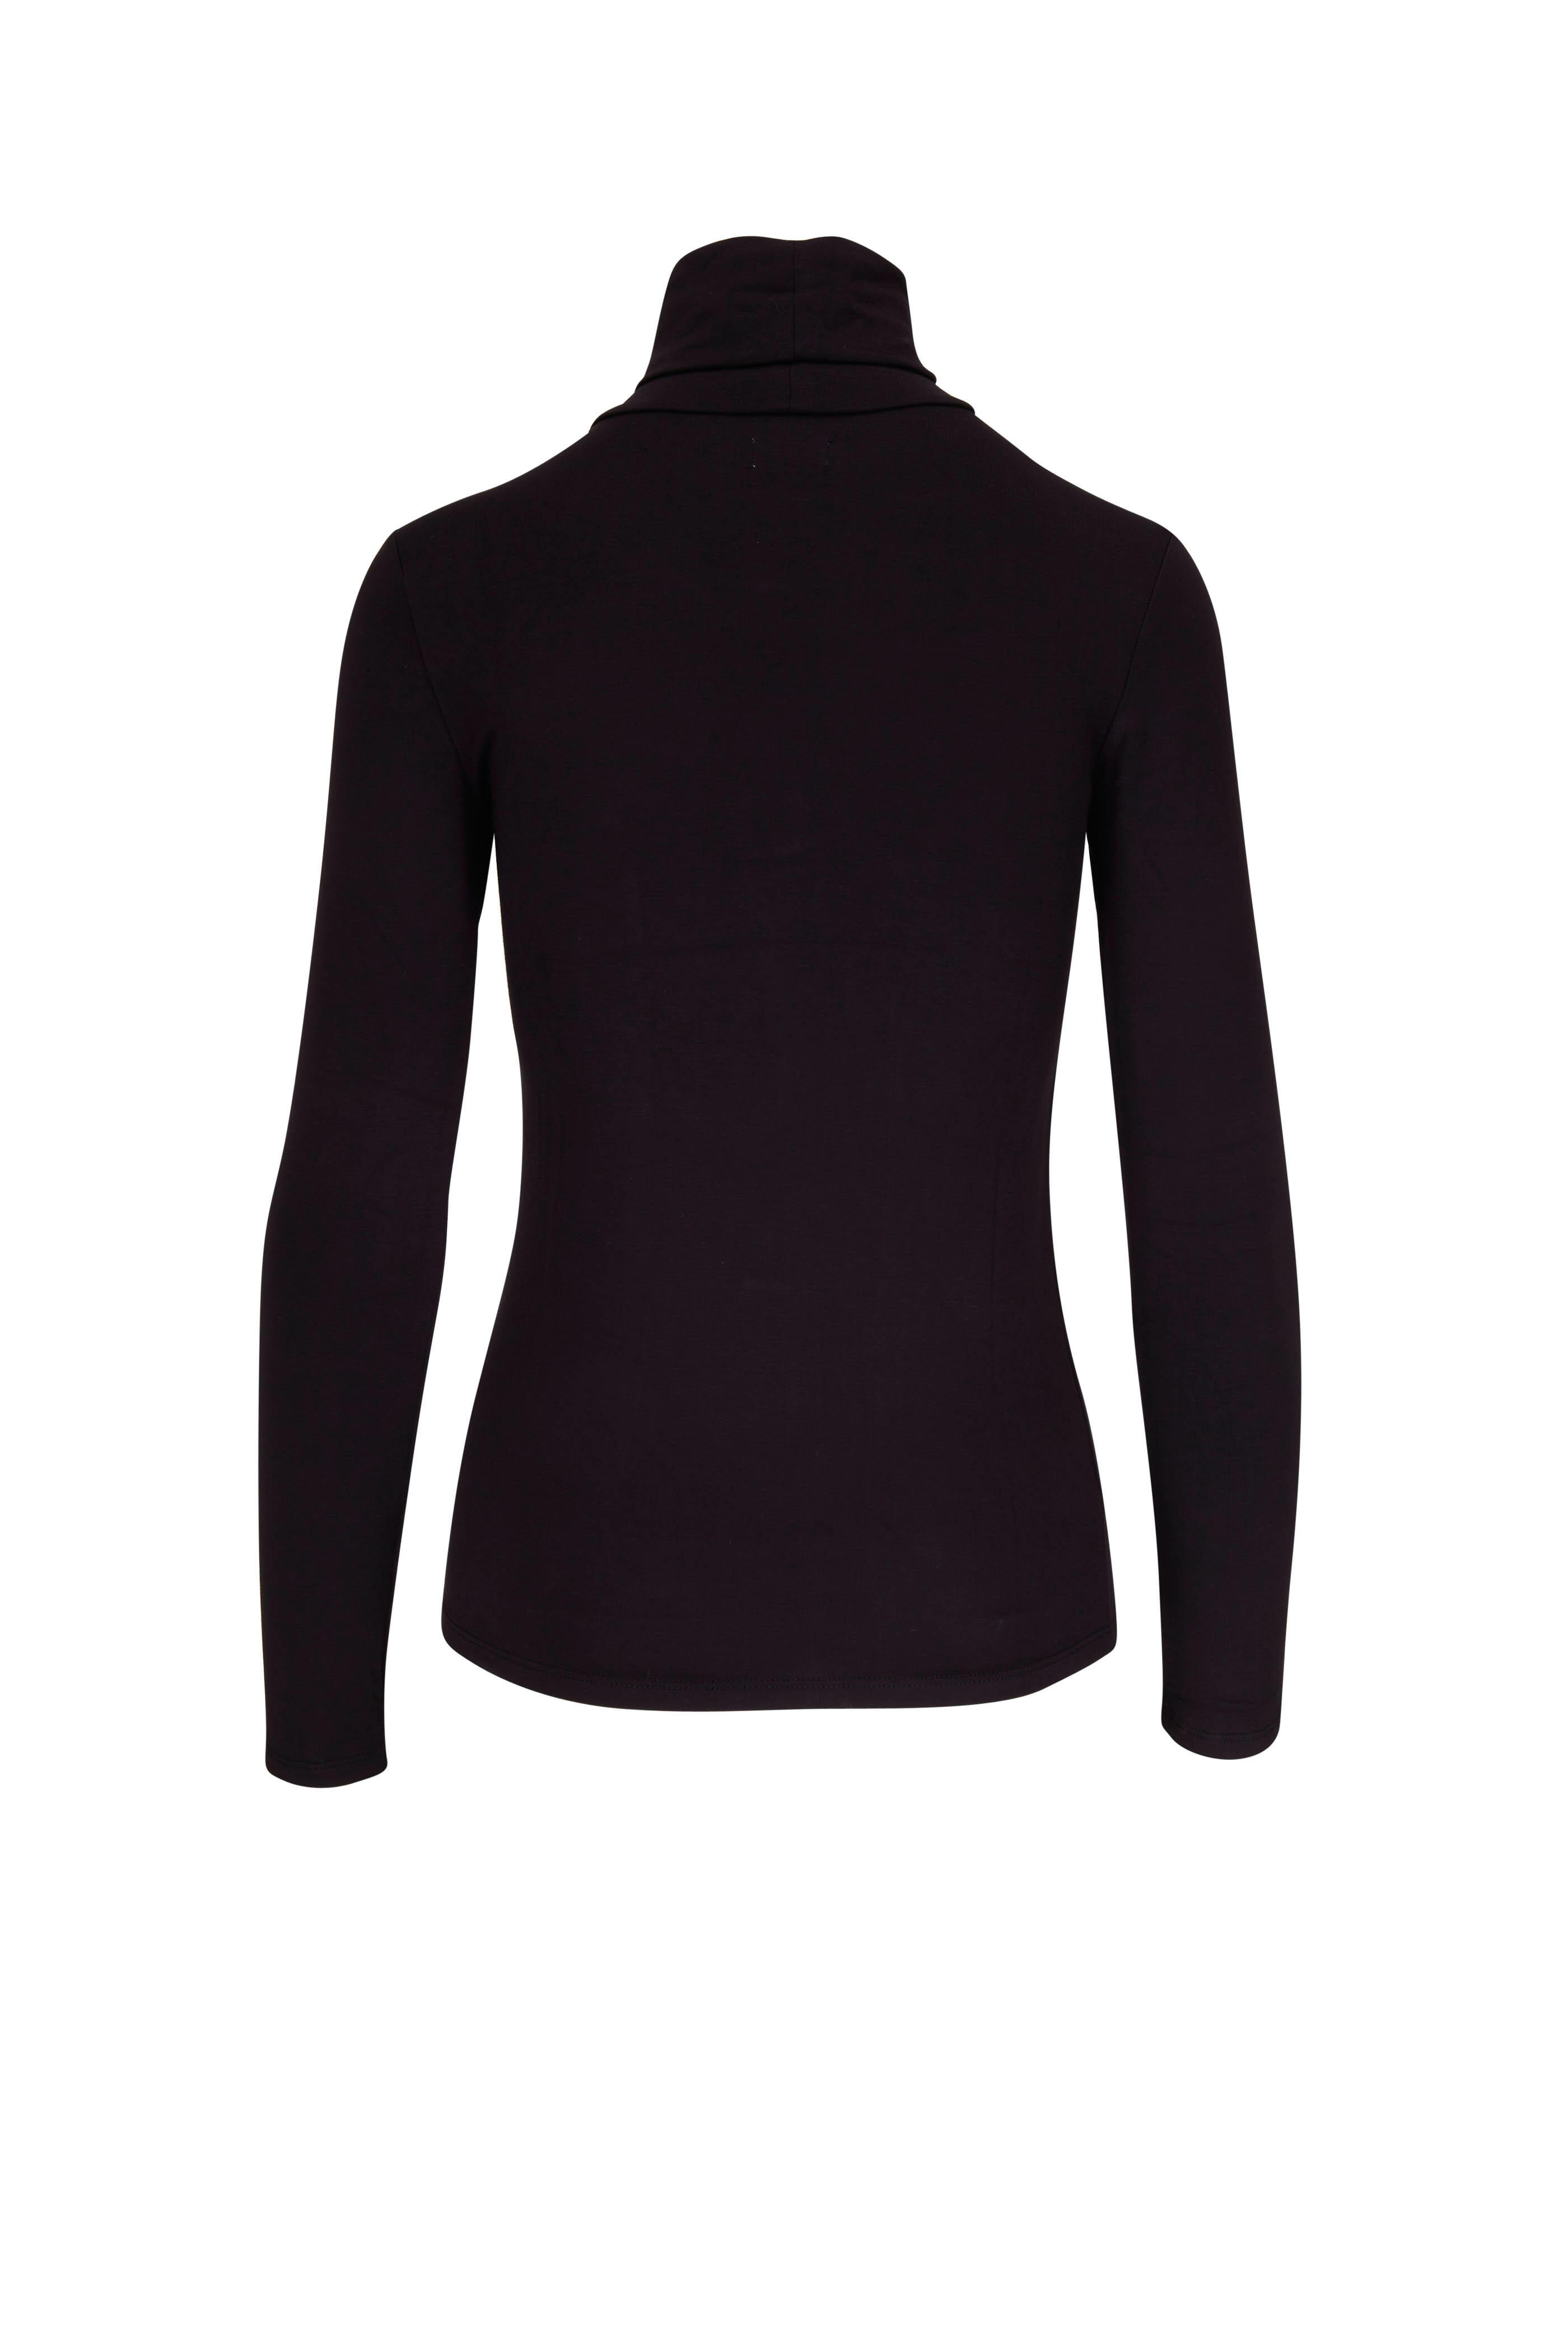 L'Agence - Lani Black Long Sleeve Turtleneck | Mitchell Stores